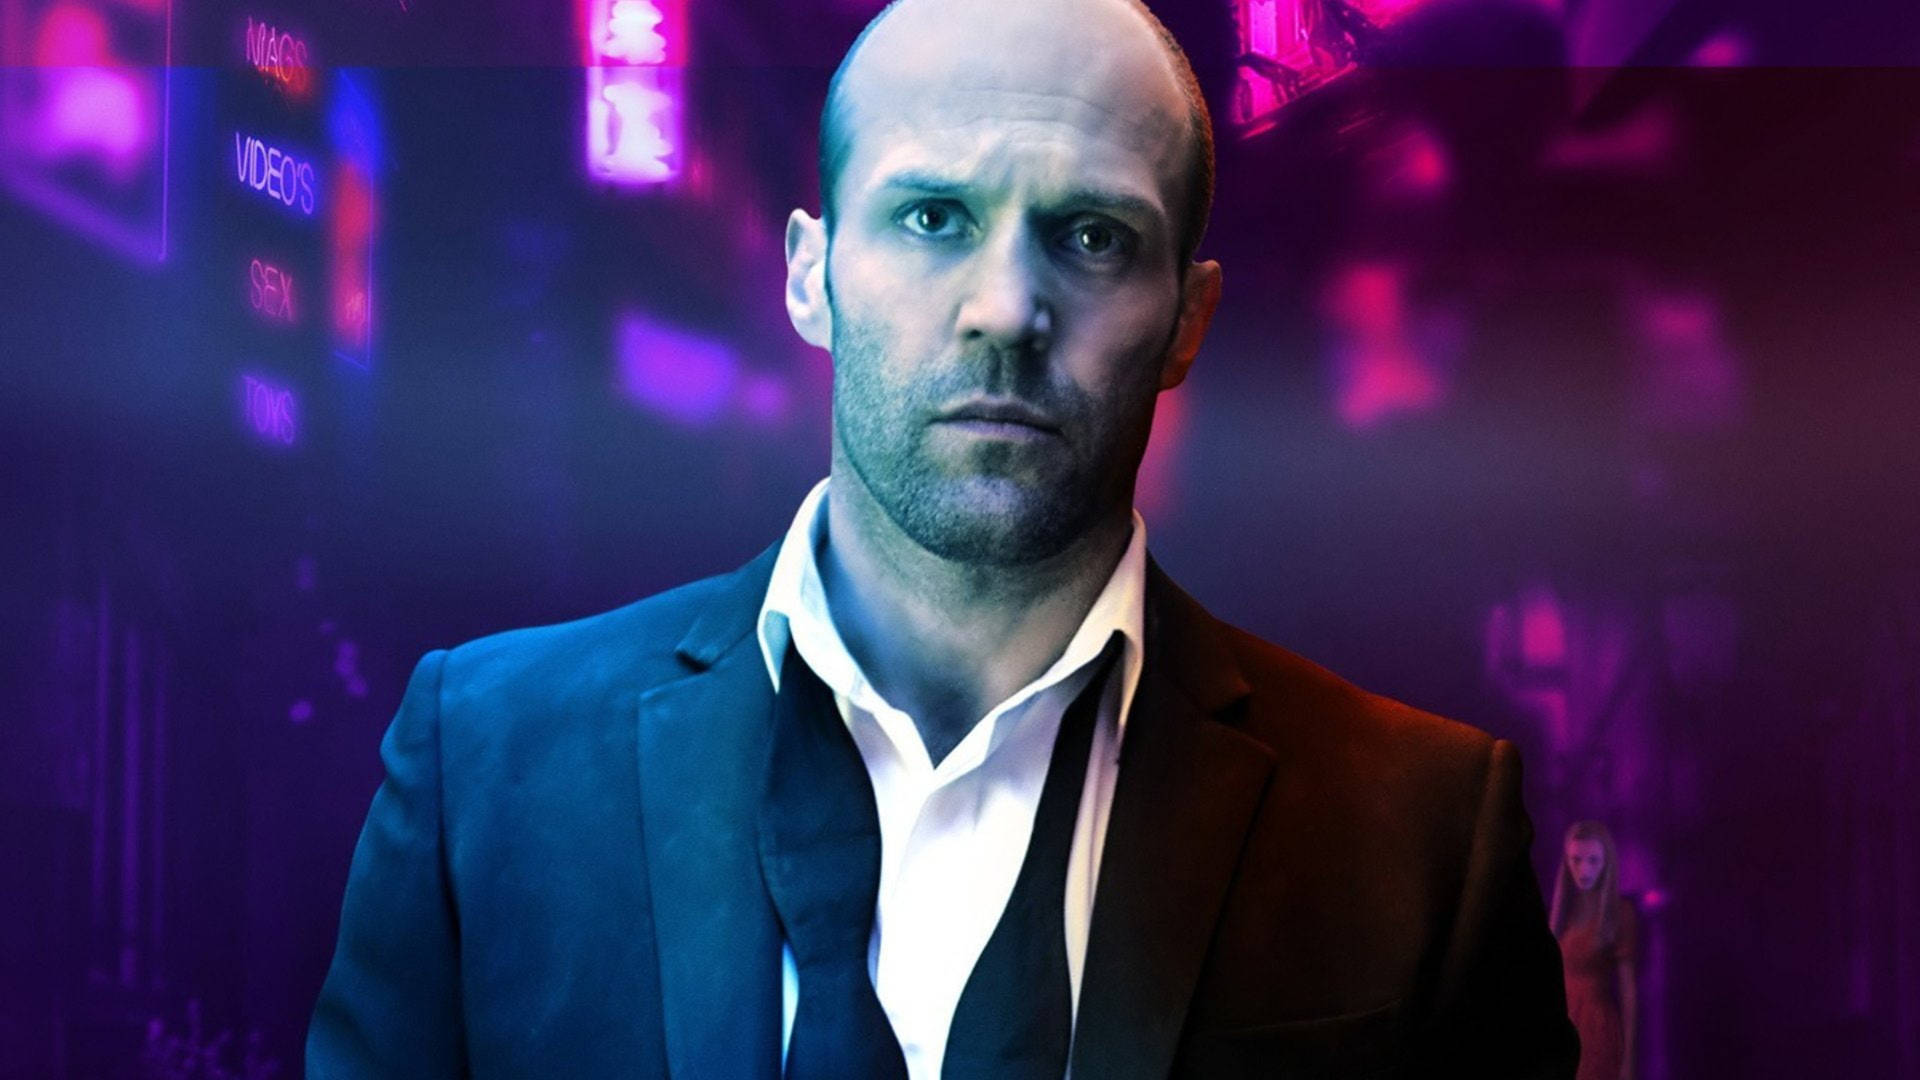 Jason Statham In Neon Aesthetic Background